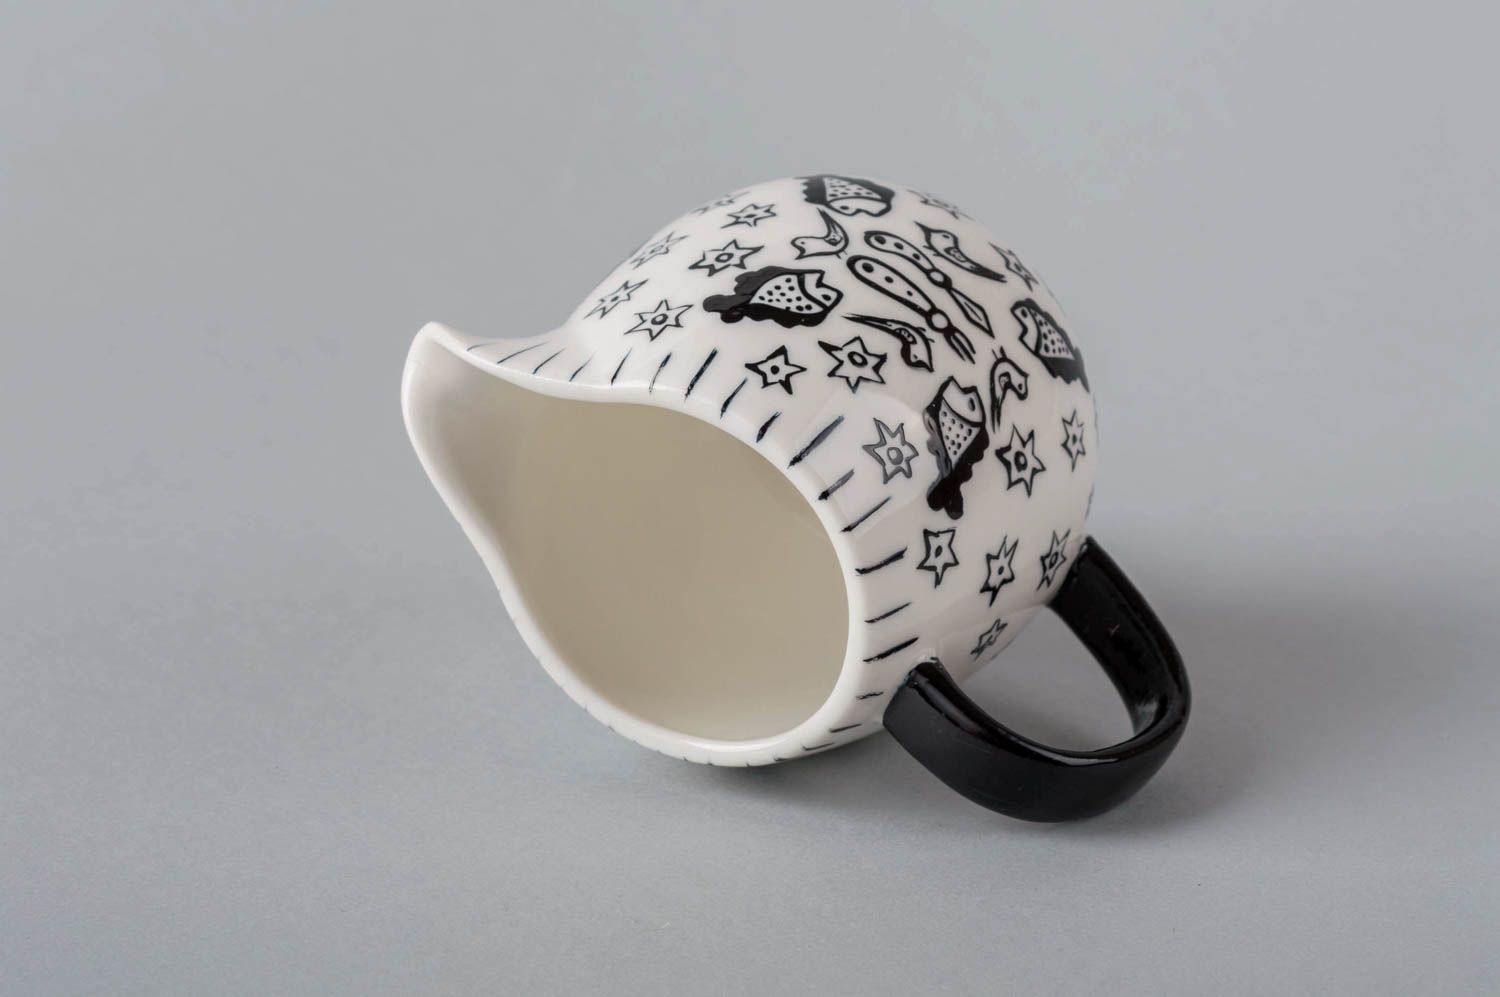 12 oz ceramic porcelain creamer jug in white and black color with fish design 0,4 lb photo 4